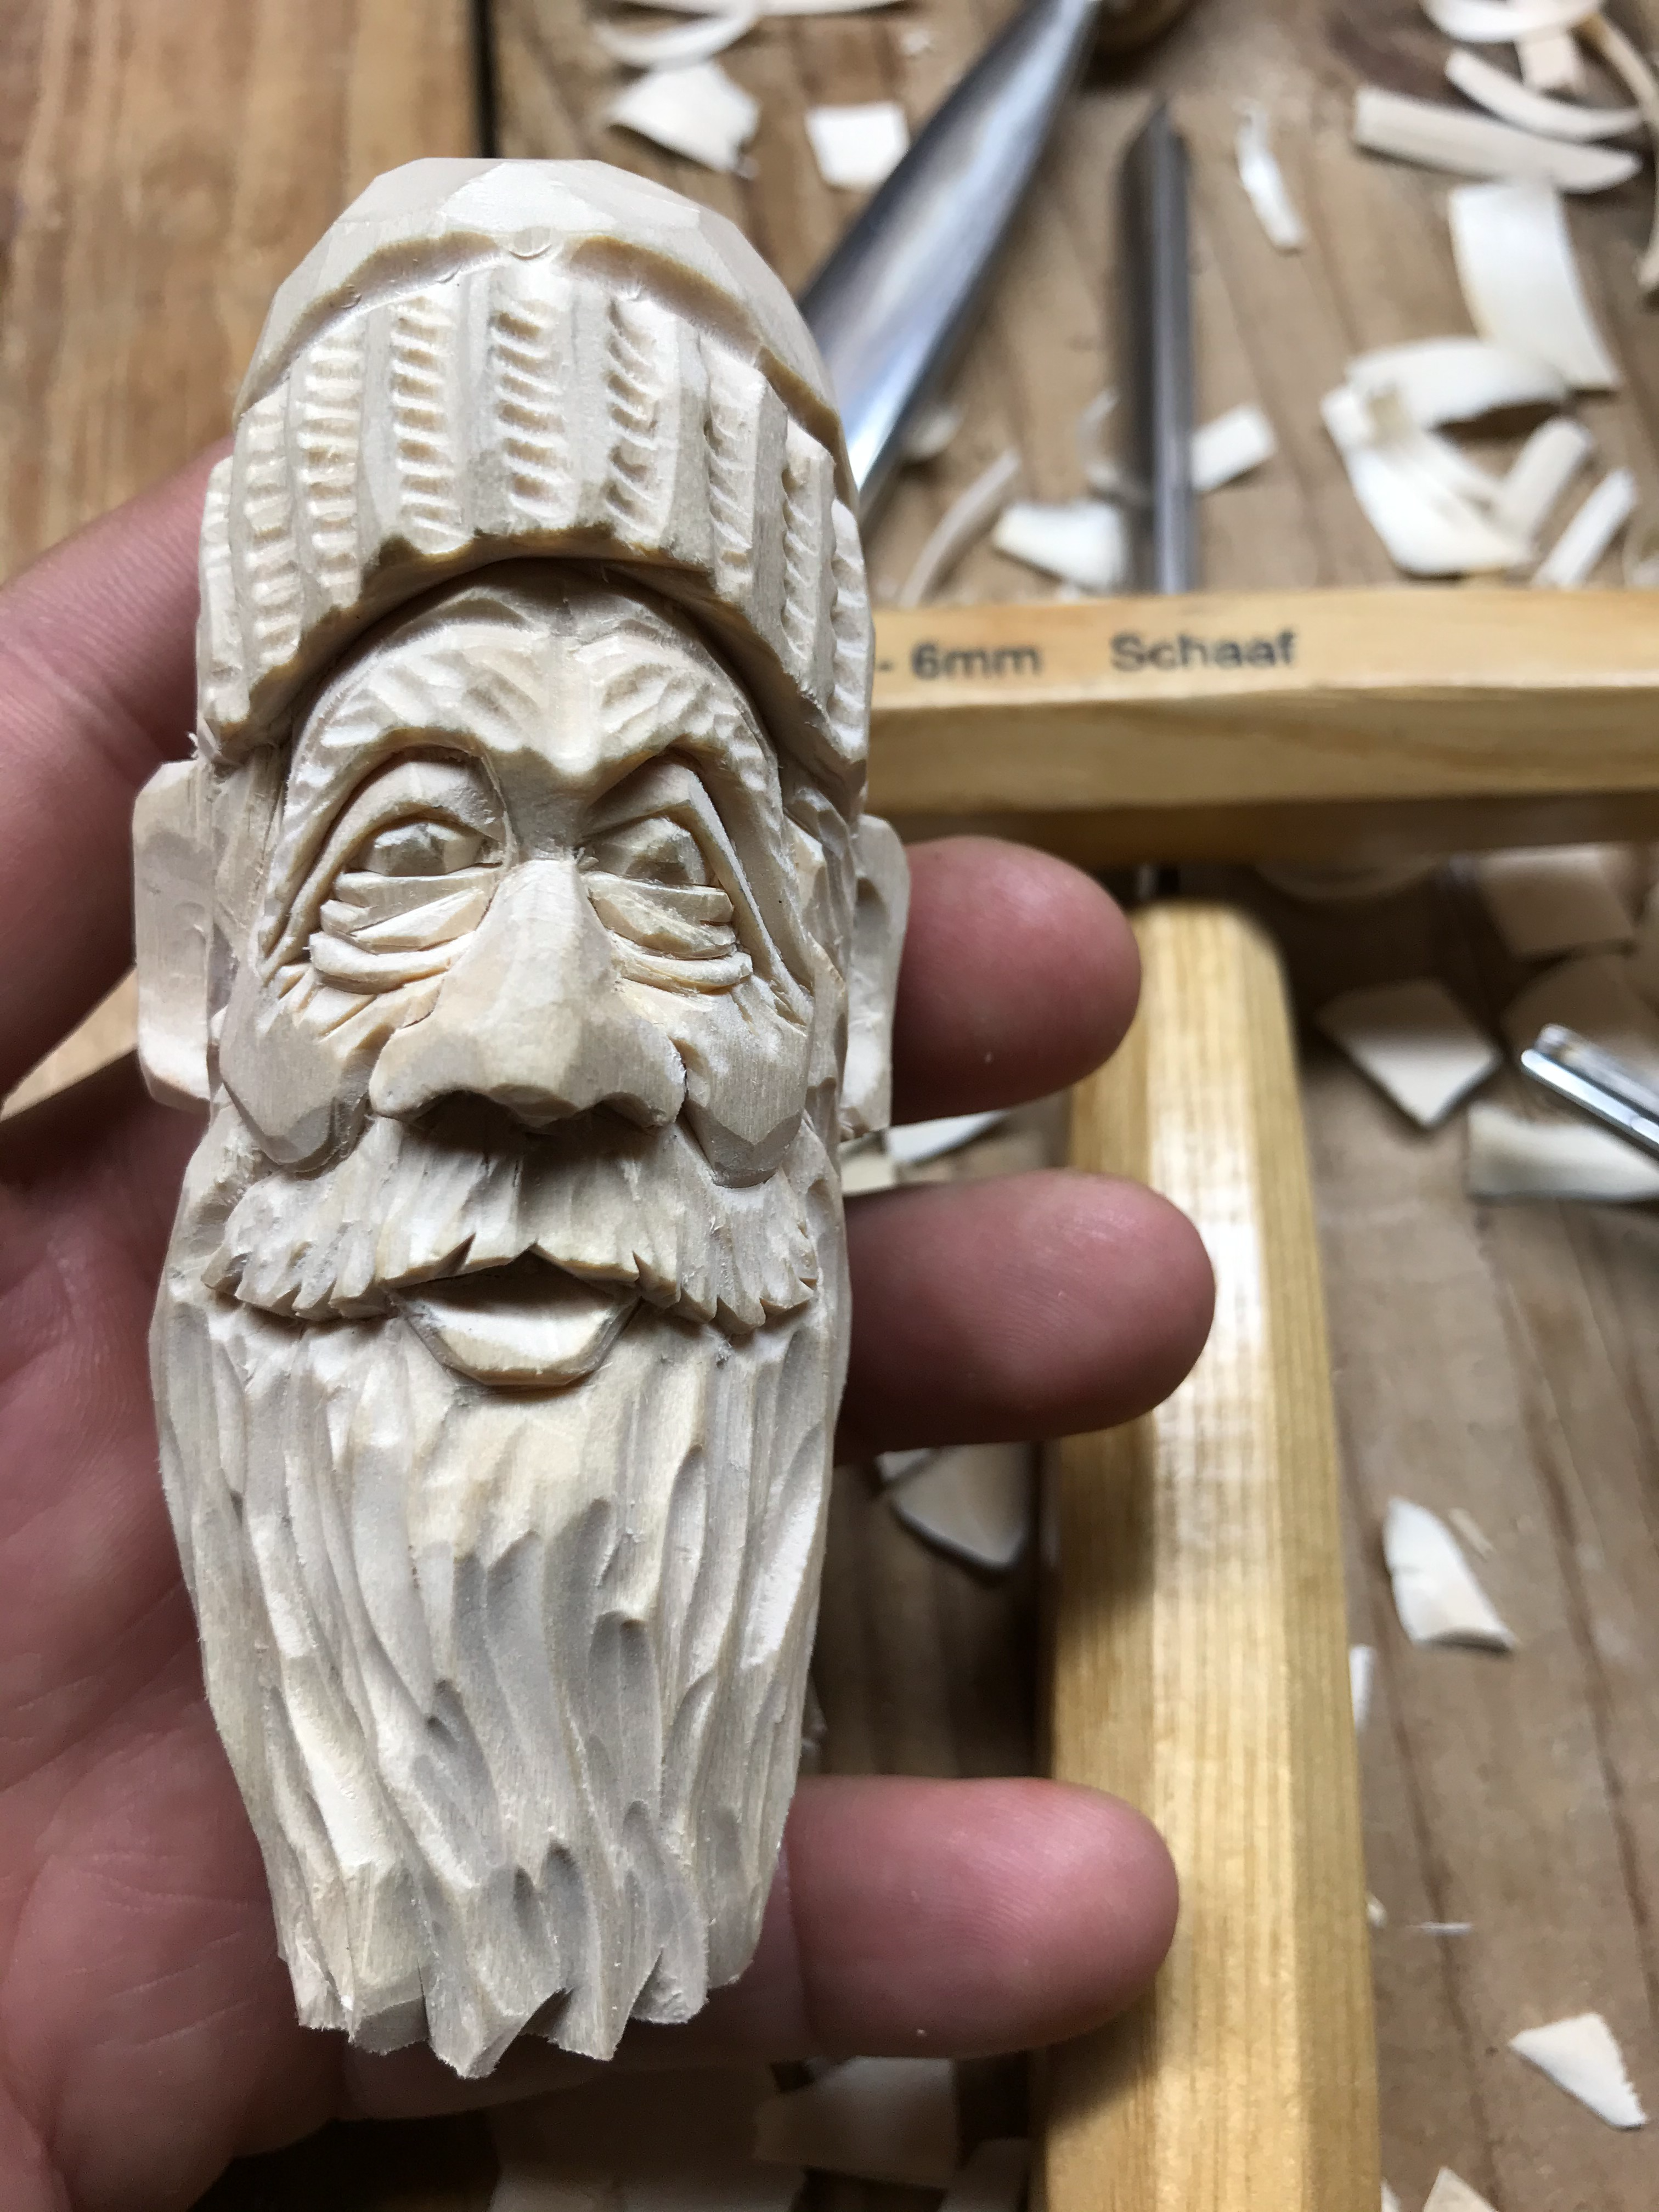 Basswood Carving Blocks,Wood Carving Blocks - Large Beginner's Premium Wood  Carving/Whittling Kit, Suitable for Beginner to Expert - 12 Pcs